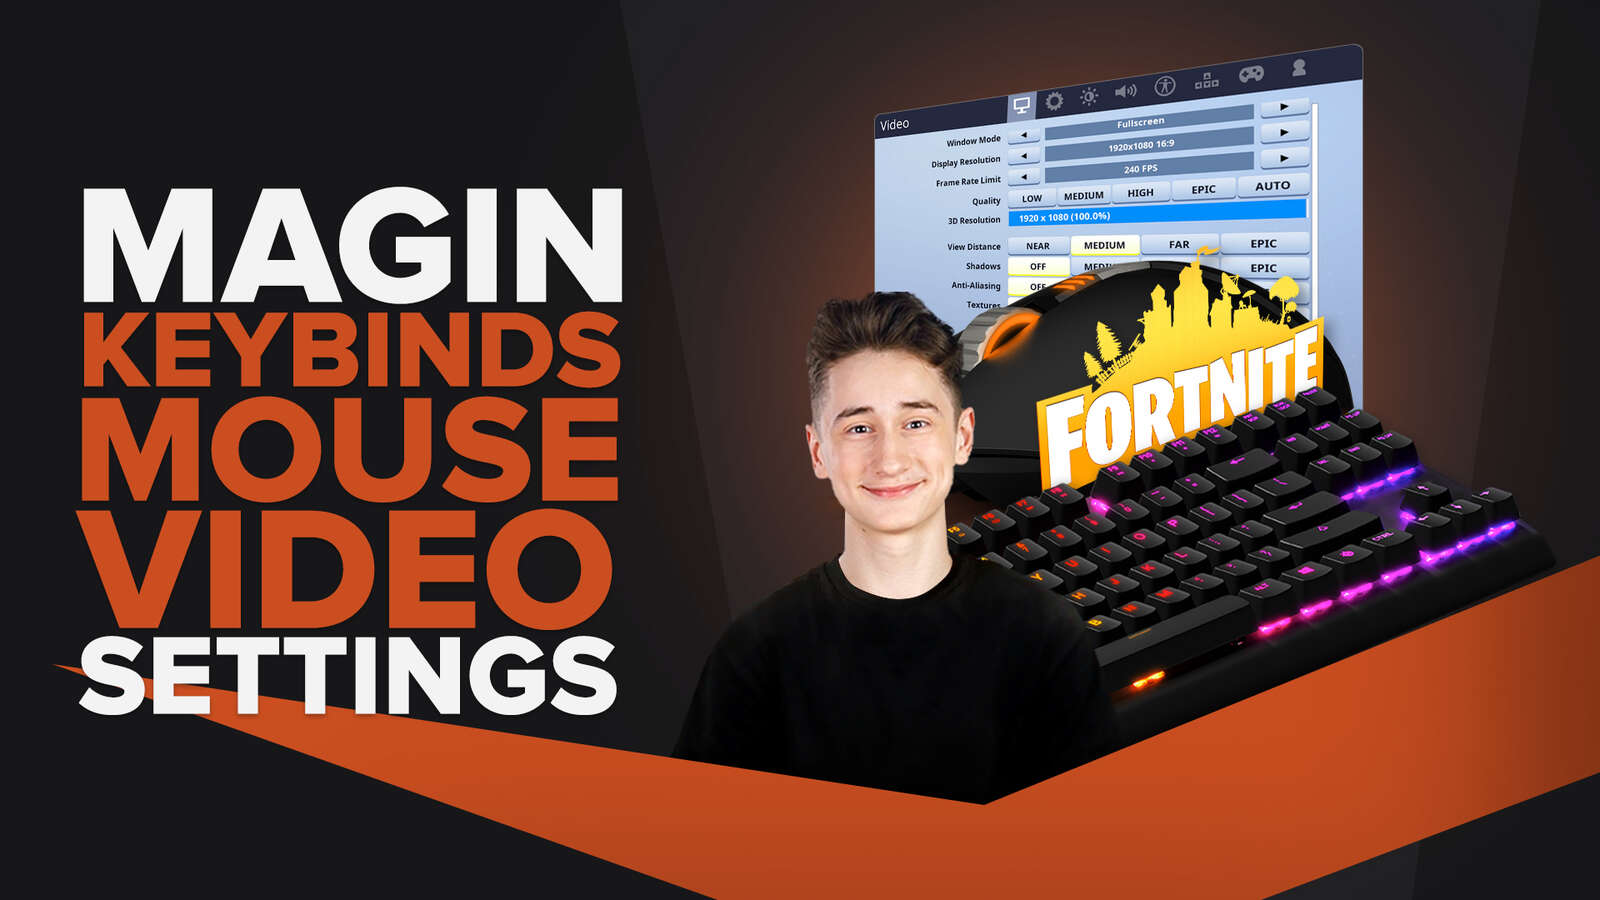 Magin | Keybinds, Mouse, Video Pro Fortnite Settings